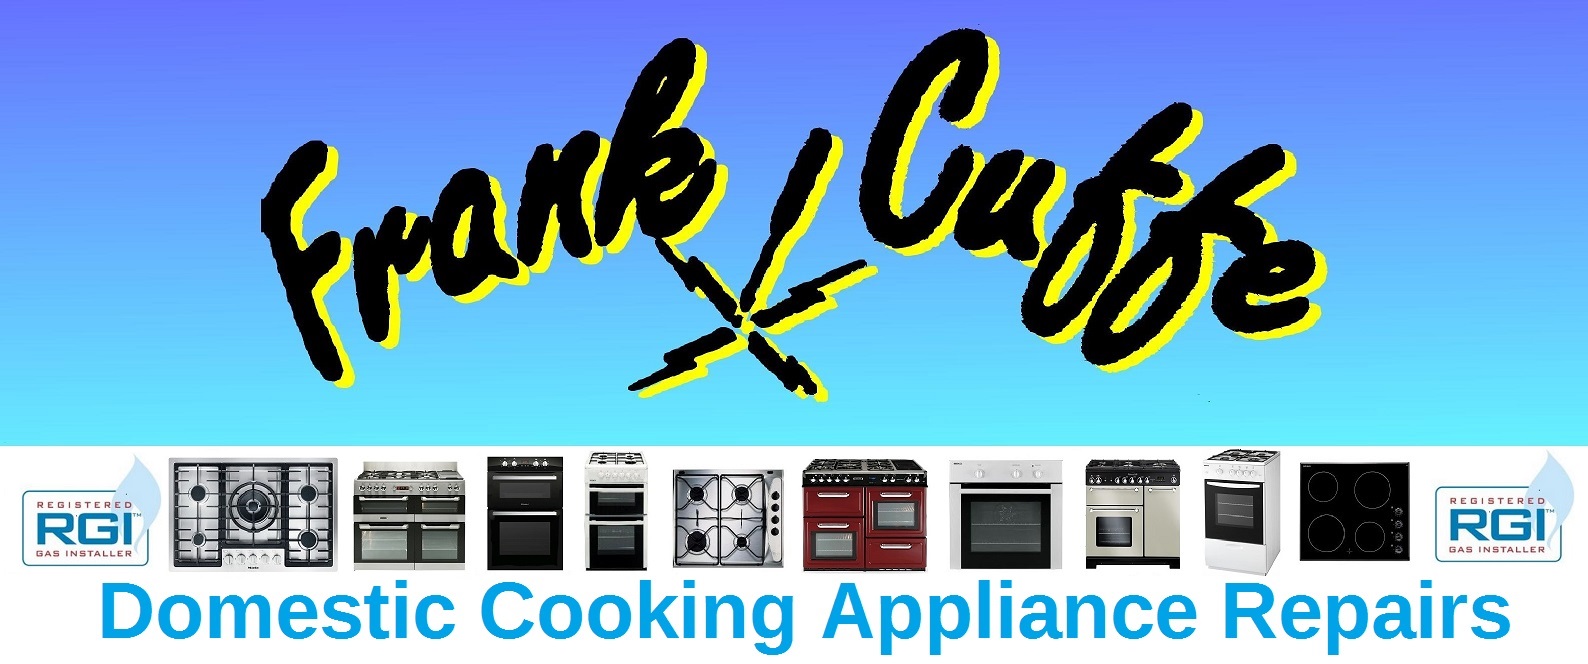 Frank Cuffe Appliance Repairs